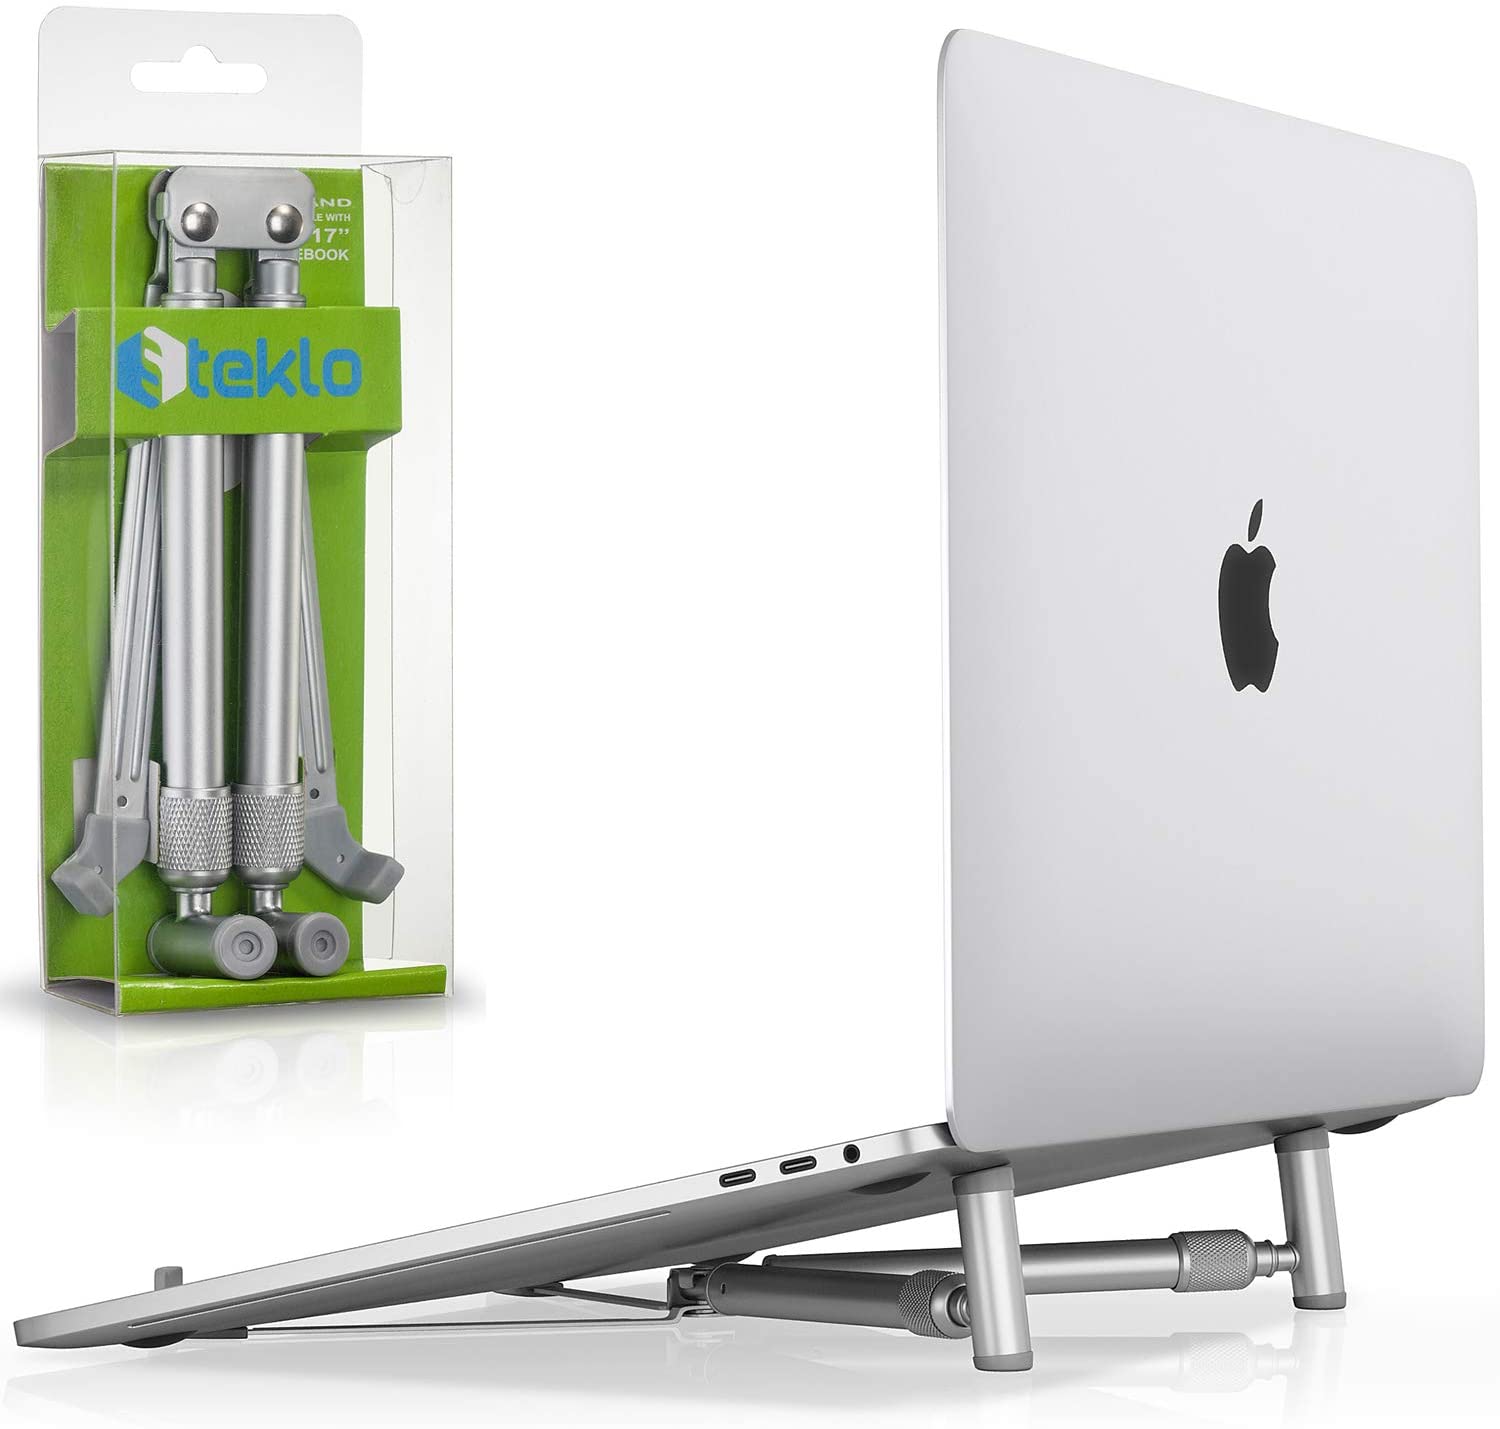 Steklo Universal Computer Cooling MacBook Pro Laptop Stand